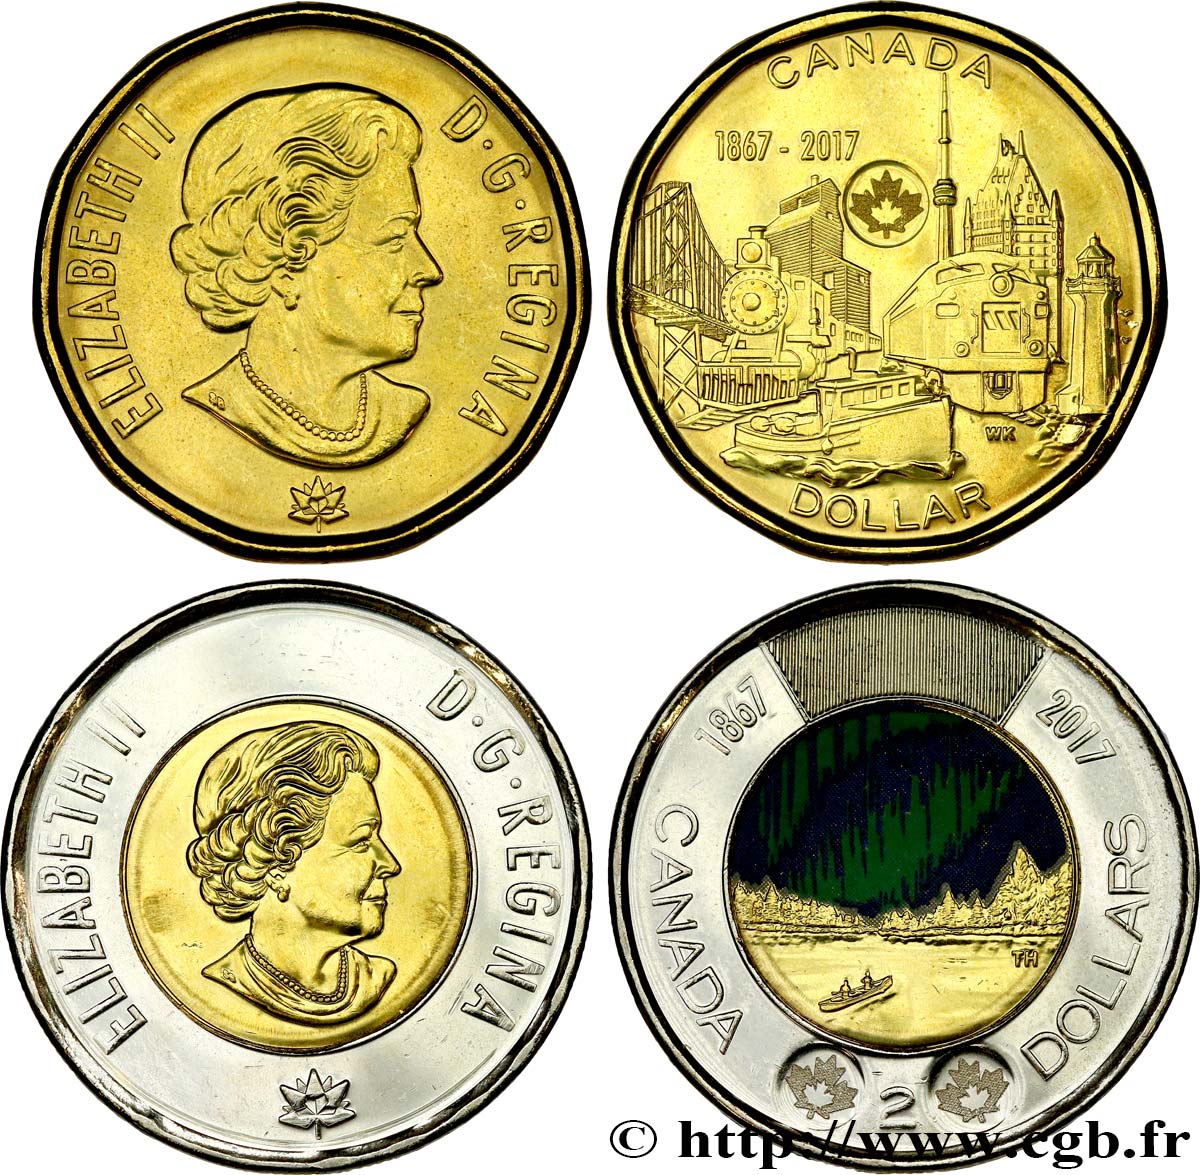 CANADA Lot de 2 monnaies de 1 & 2 dollars 150 ans du Canada 2017  MS 